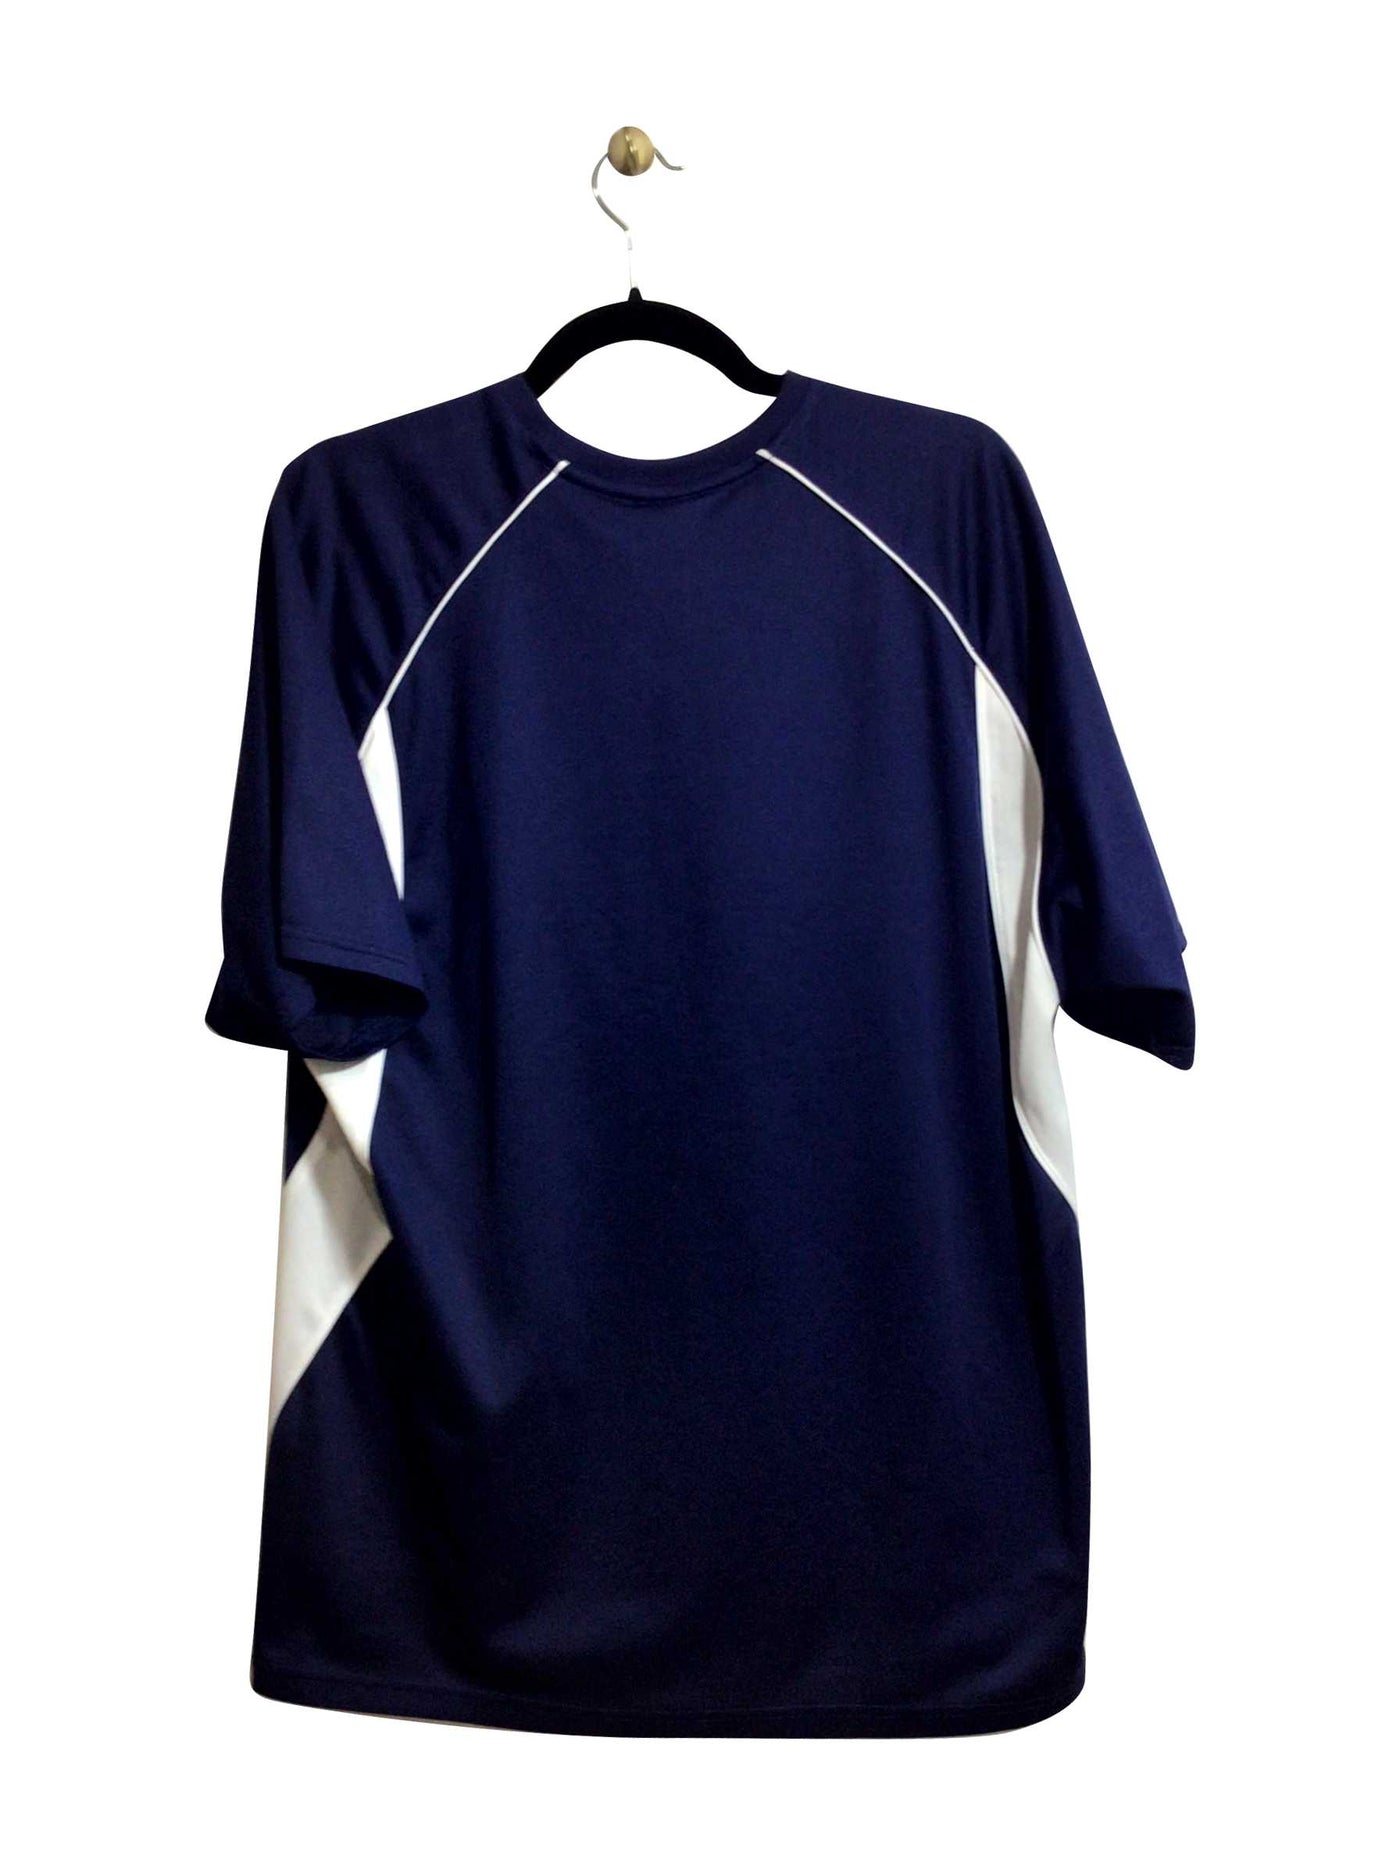 ADIDAS Regular fit T-shirt in Blue - Size L | 21.95 $ KOOP